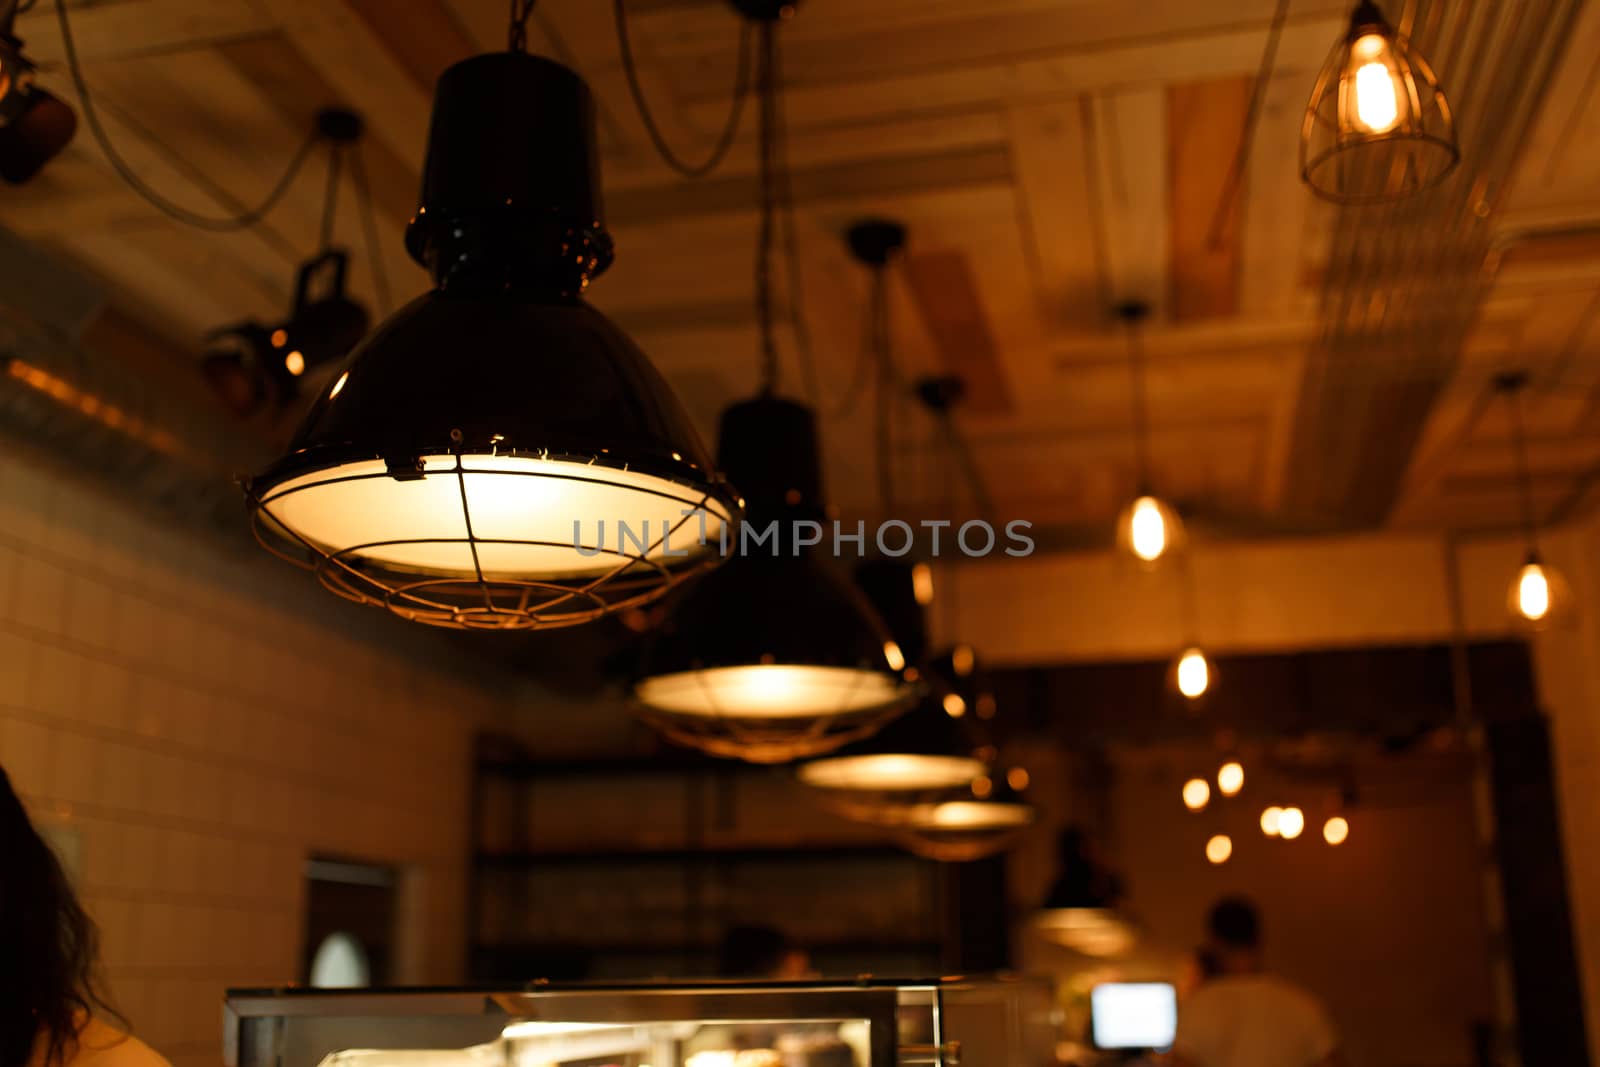 Stylish lighting lamps over a bar counter in a loft hookah bar.